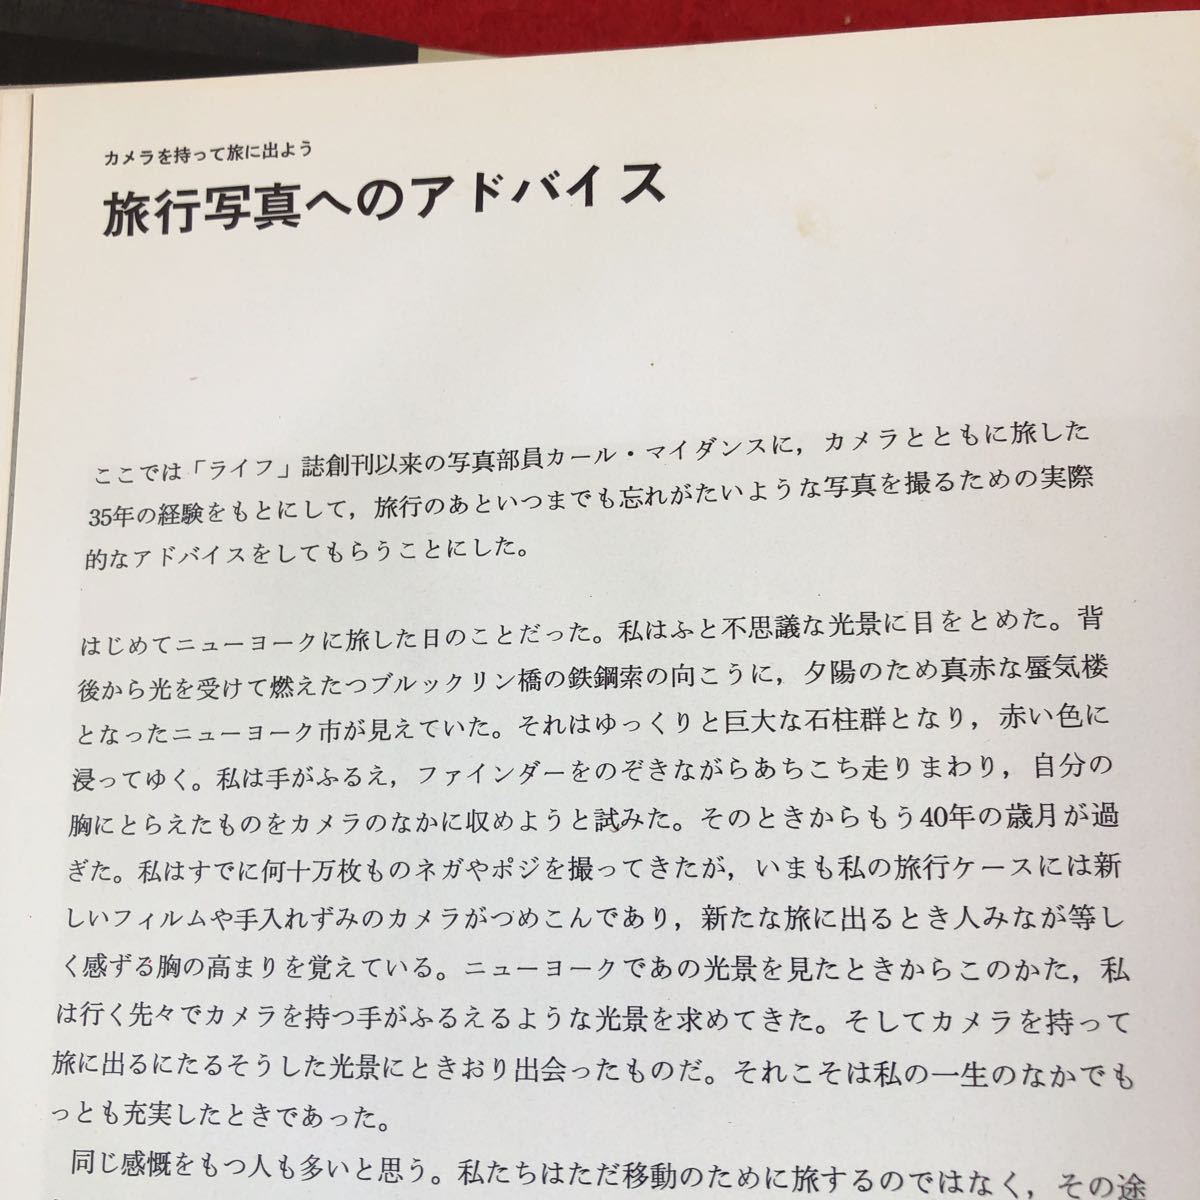 S6c-284 旅行と写真 日本語版 ライフ写真講座 1973年 発行 タイムライフブックス 写真 撮影 旅行 風景 技術 芸術 専門誌 モノクロ 色彩_画像5